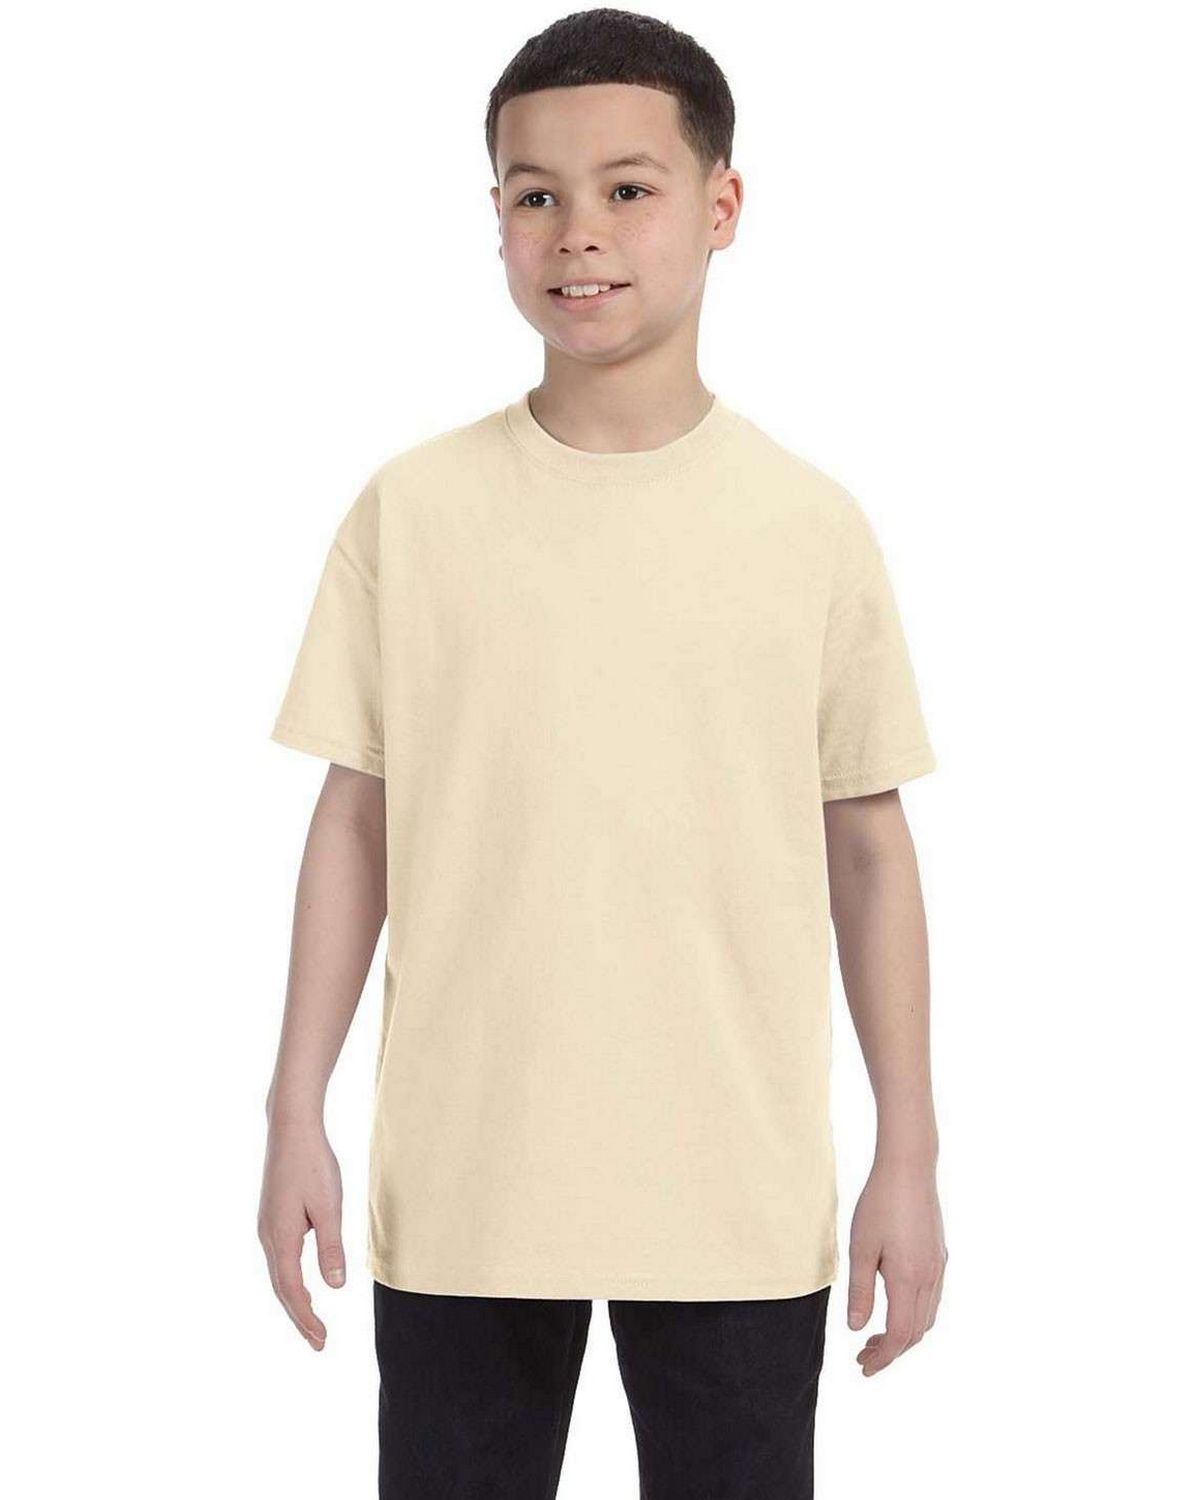 Gildan Youth Heavy 100/% Cotton T-Shirt Plain Blank Tee 5000B S-XL Bulk Colors